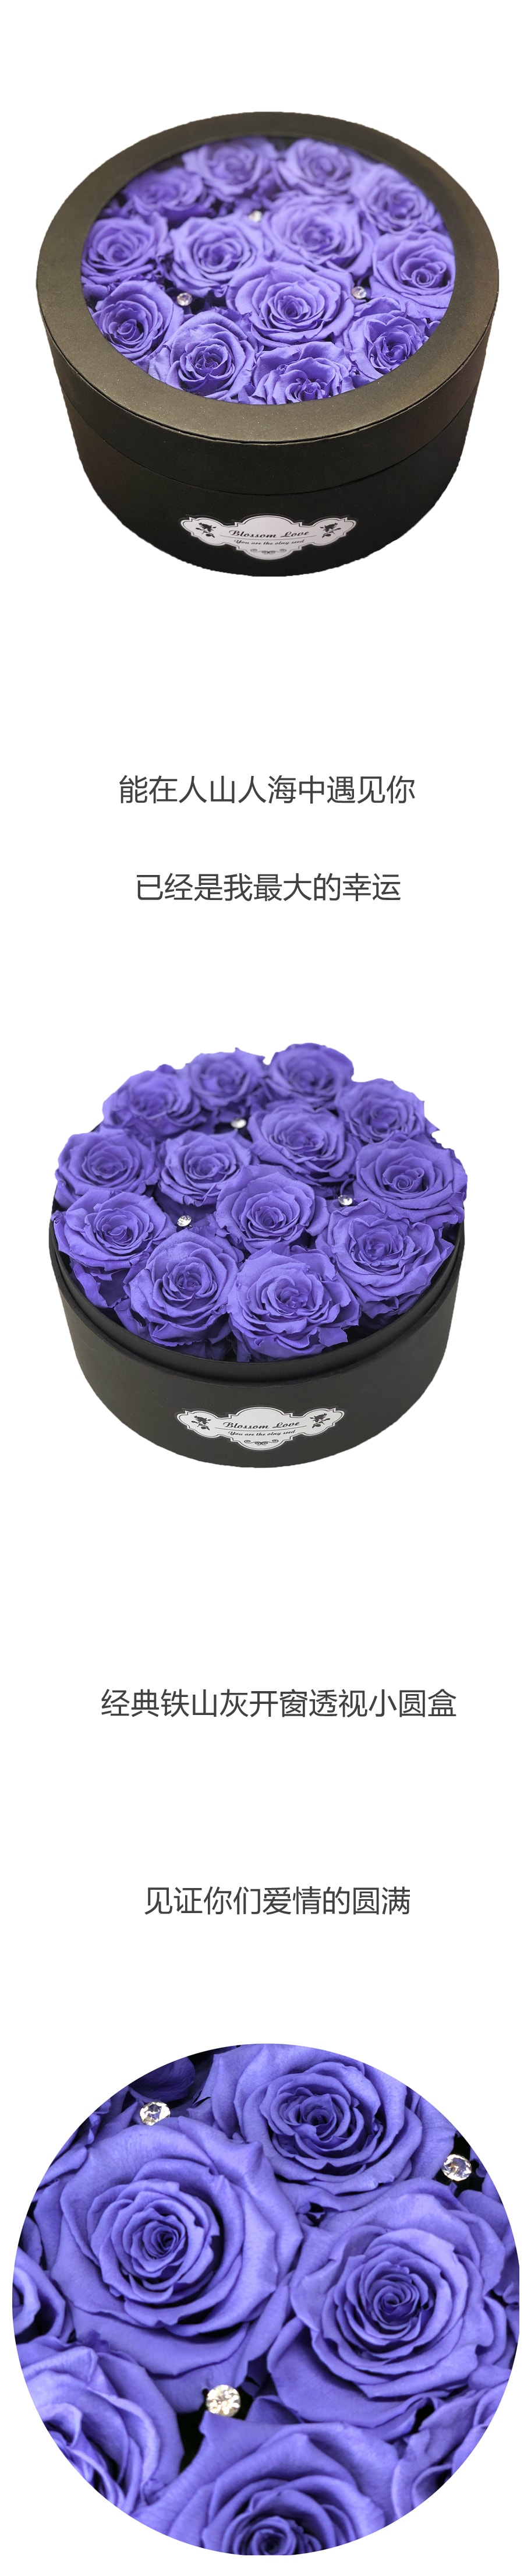 BLOSSOMING LOVE 经典透视开窗小圆盒 紫色永生花